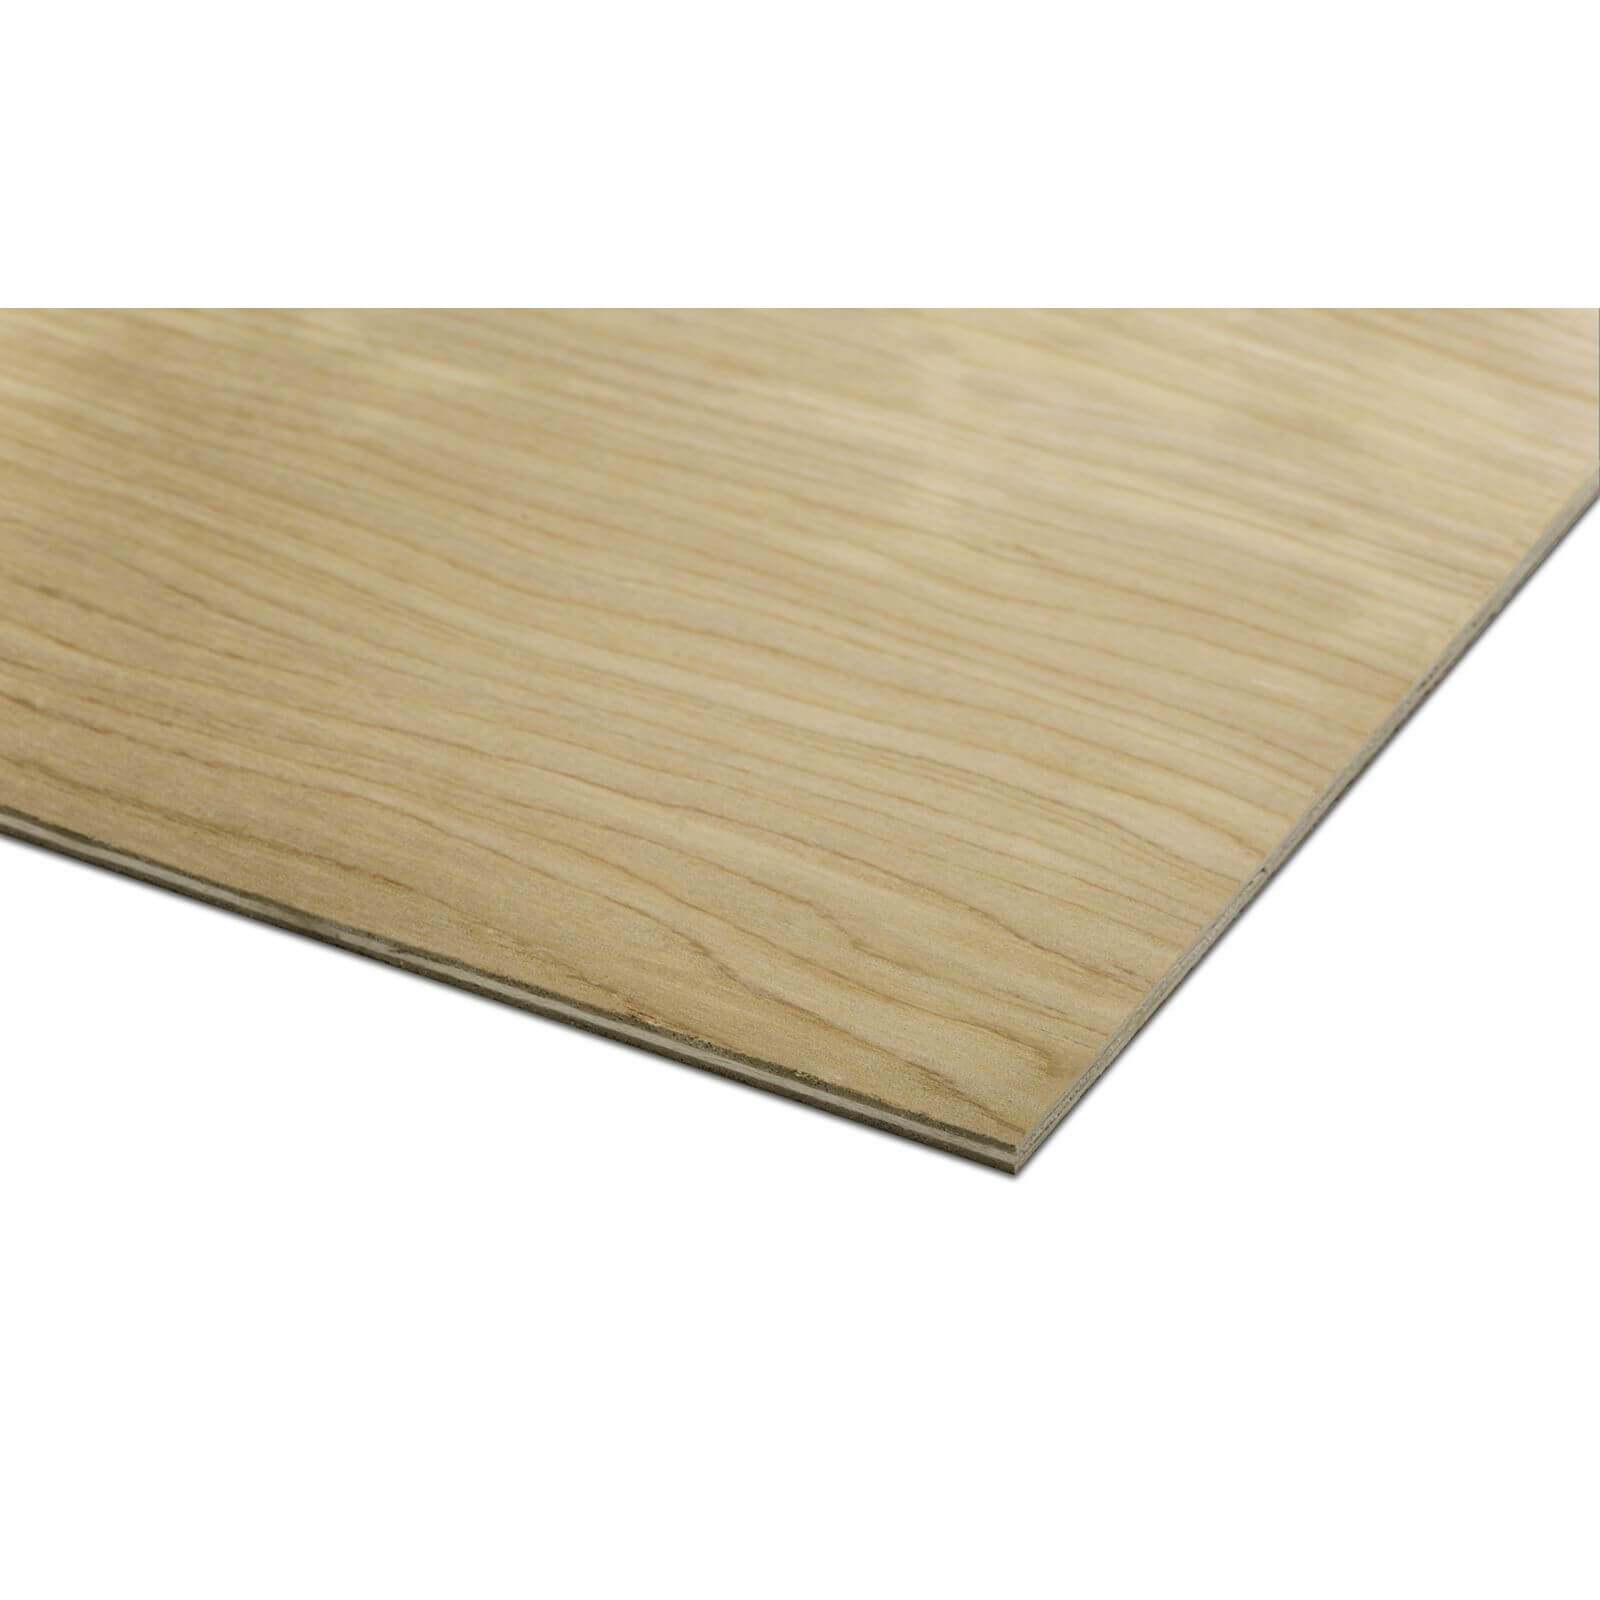 Metsa Hardwood Plywood Board 1.8m (1829 x 607 x 5.5mm)